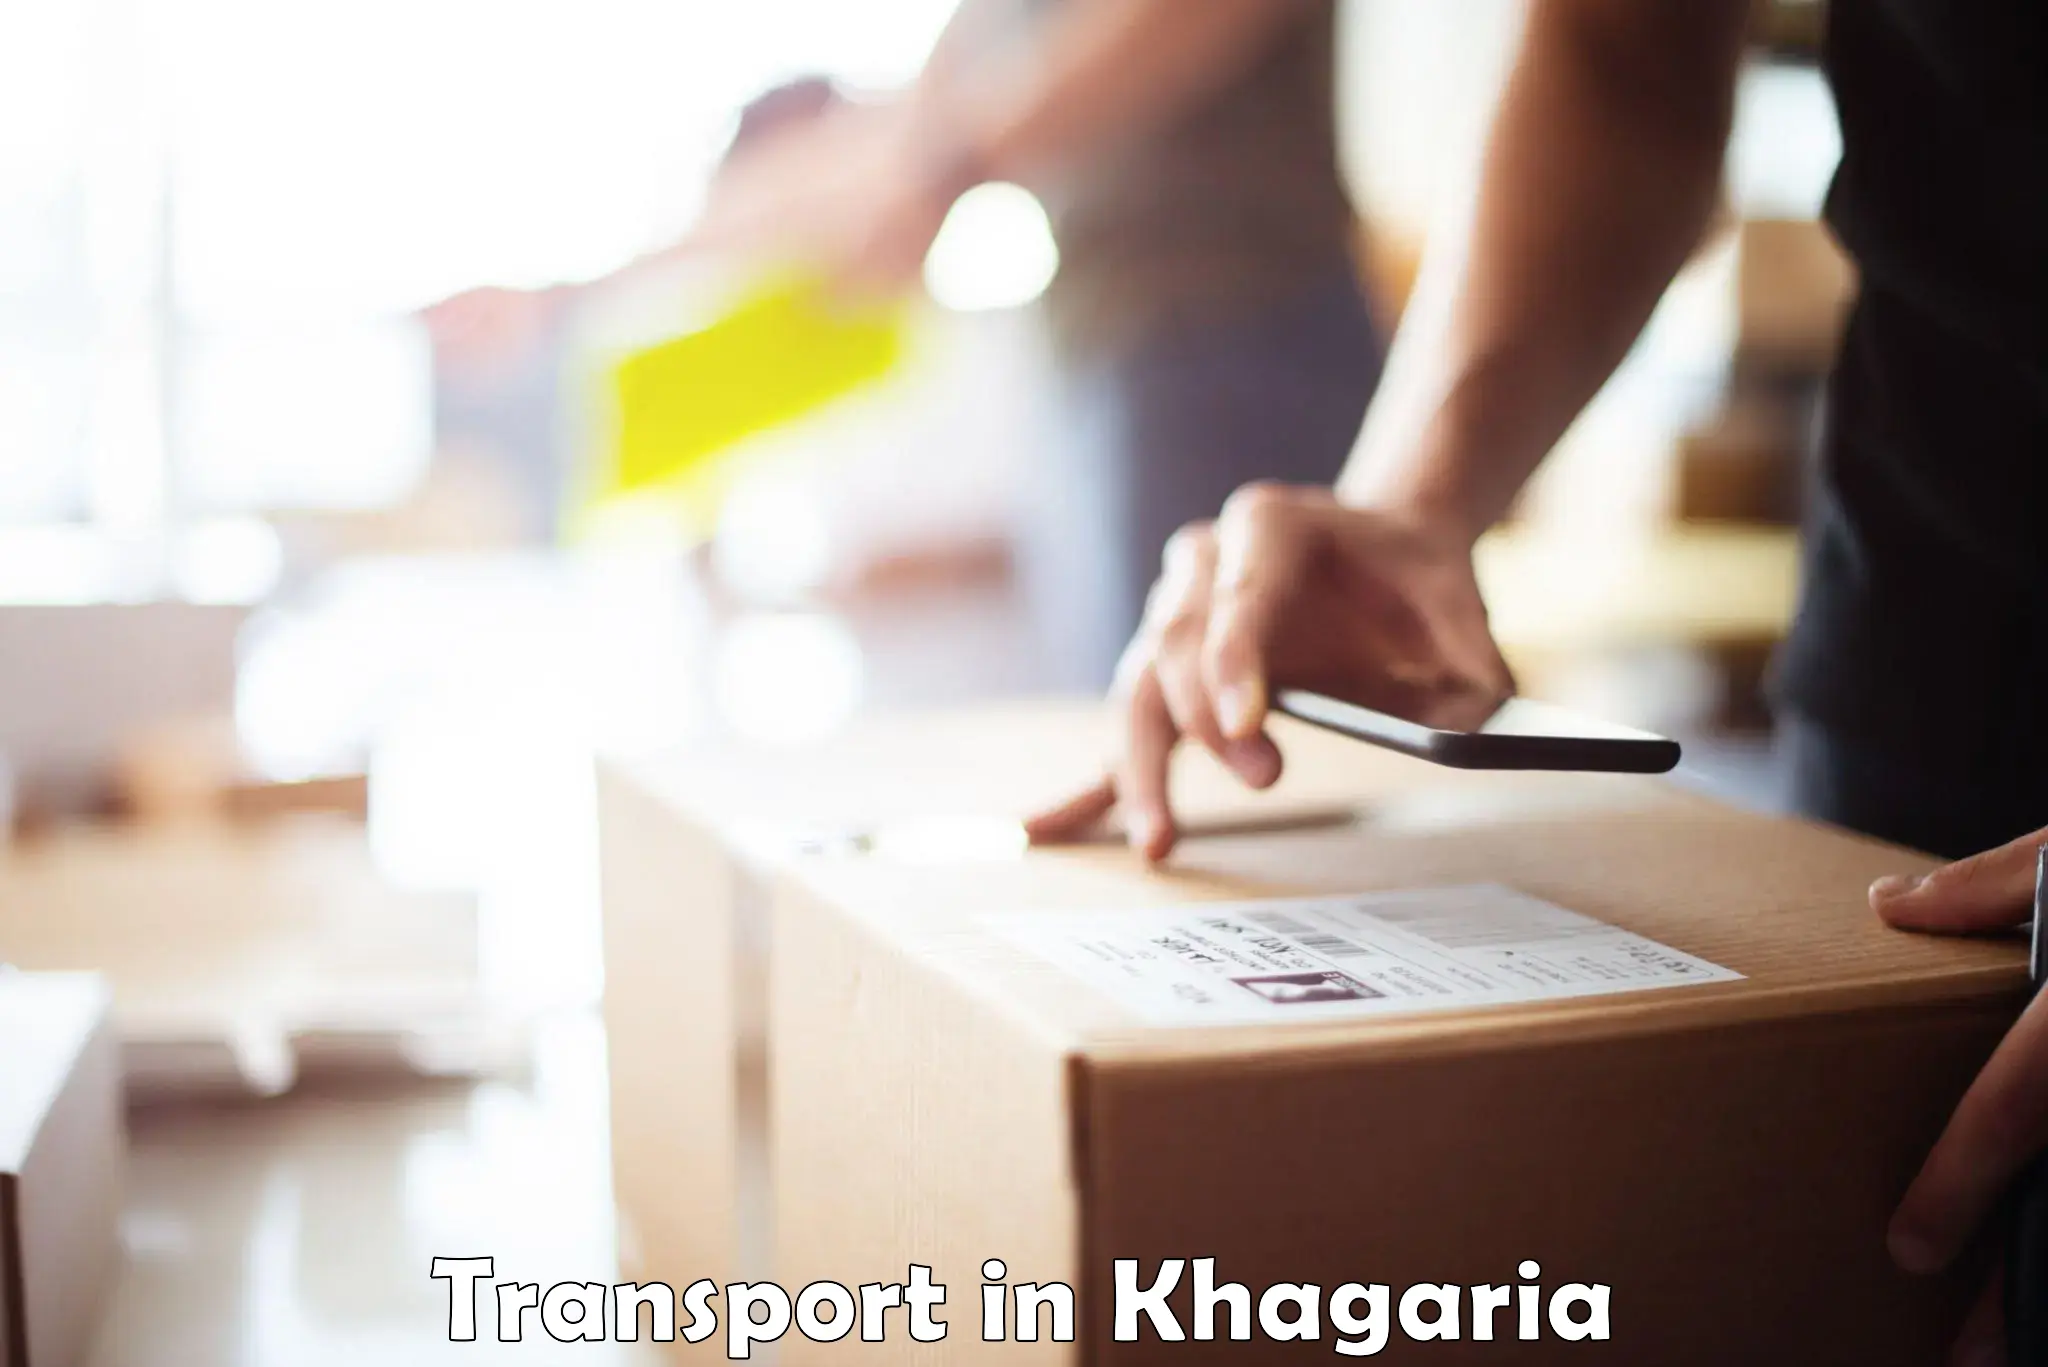 Interstate goods transport in Khagaria